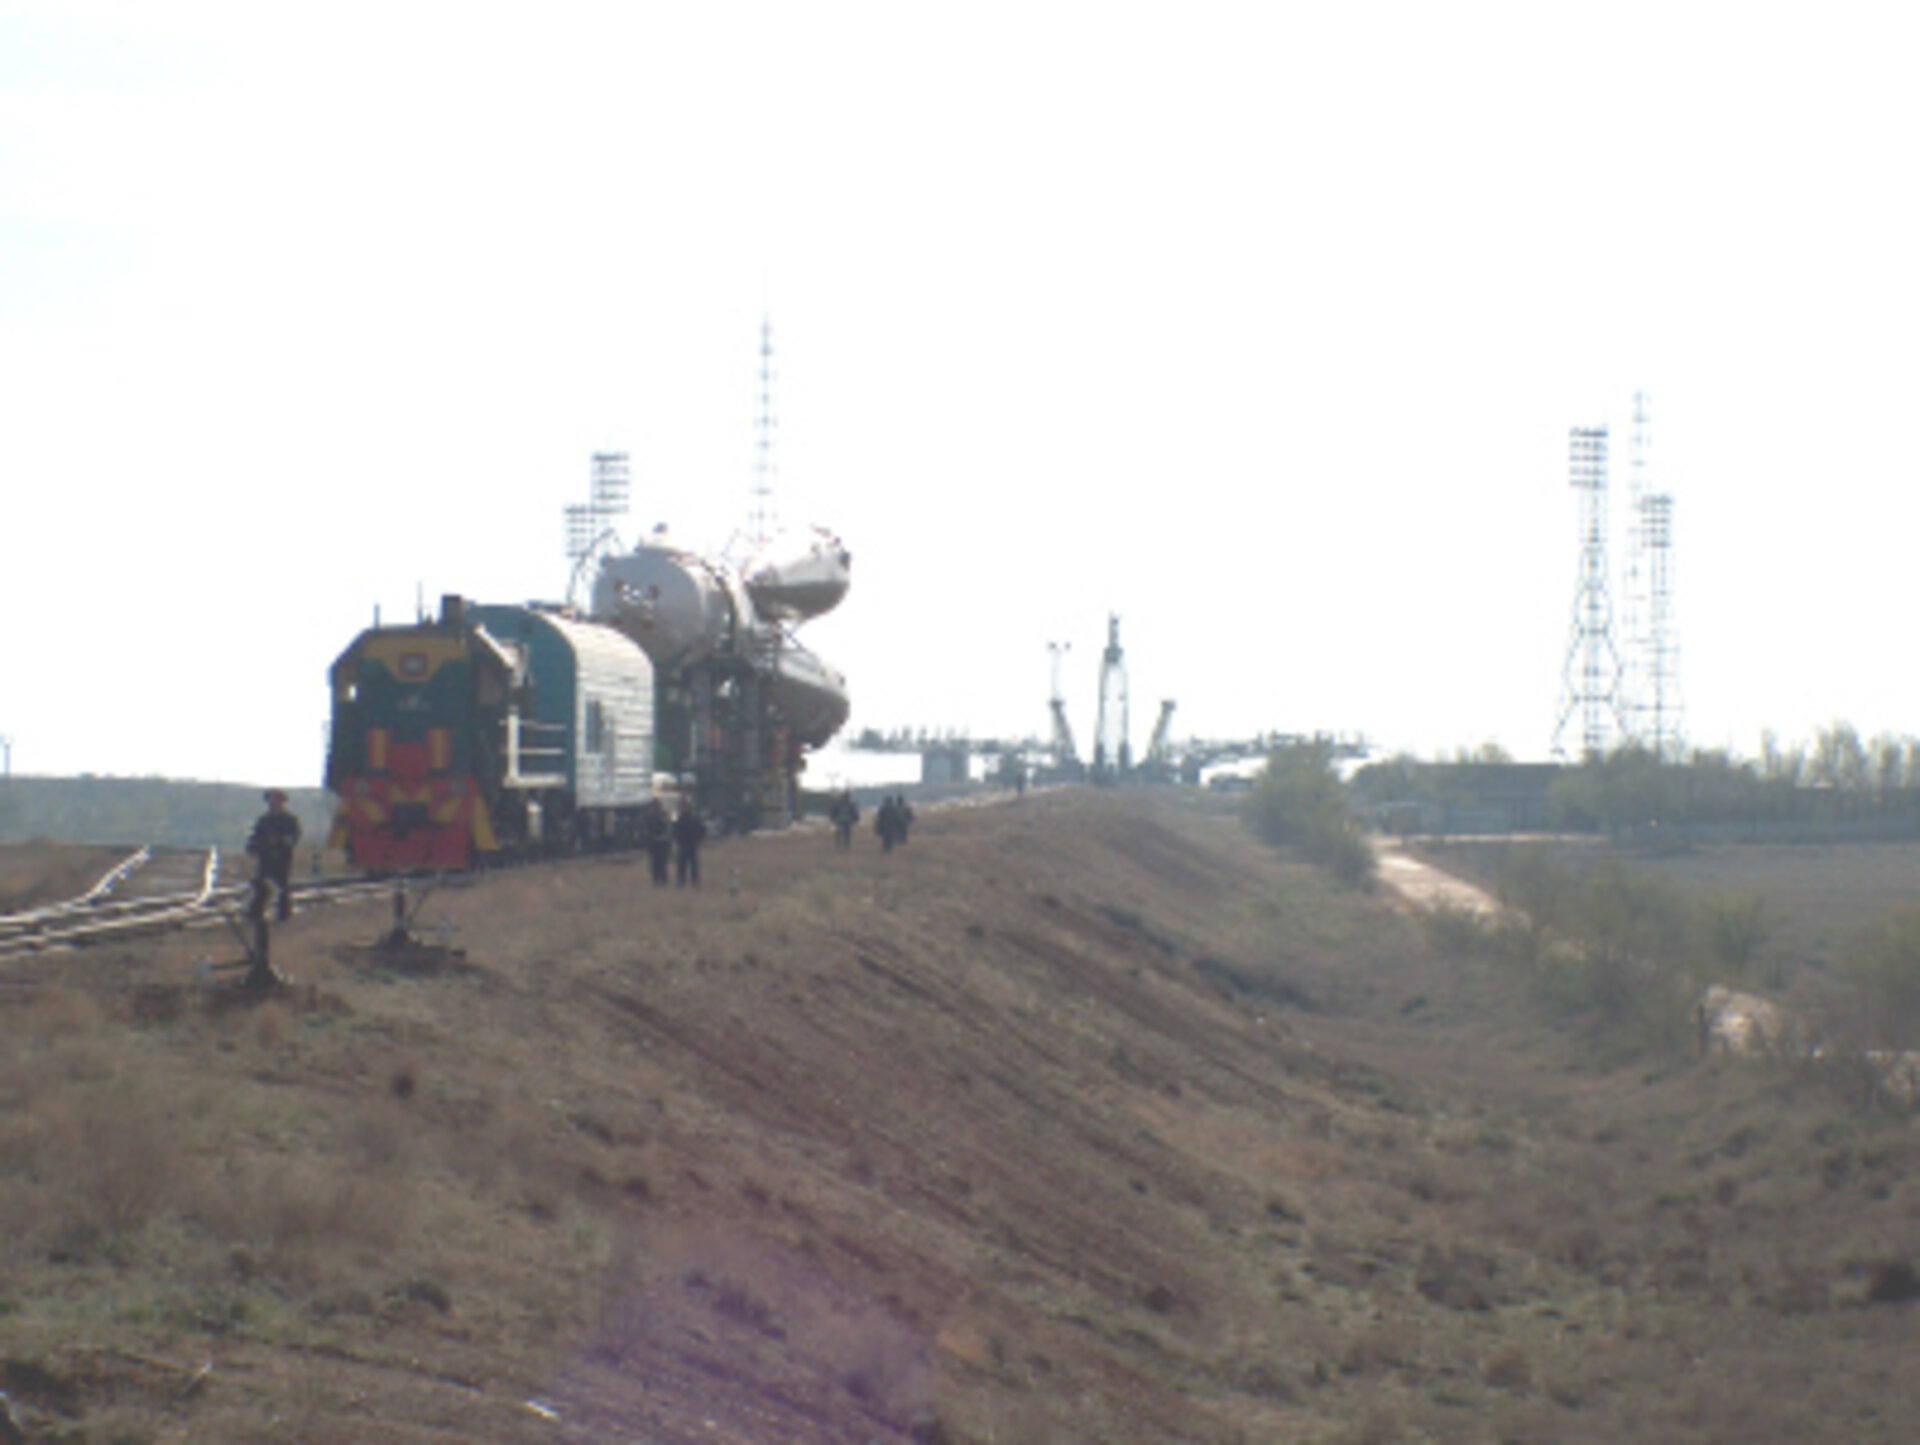 Delta mission Soyuz rocket rollout in Baikonour